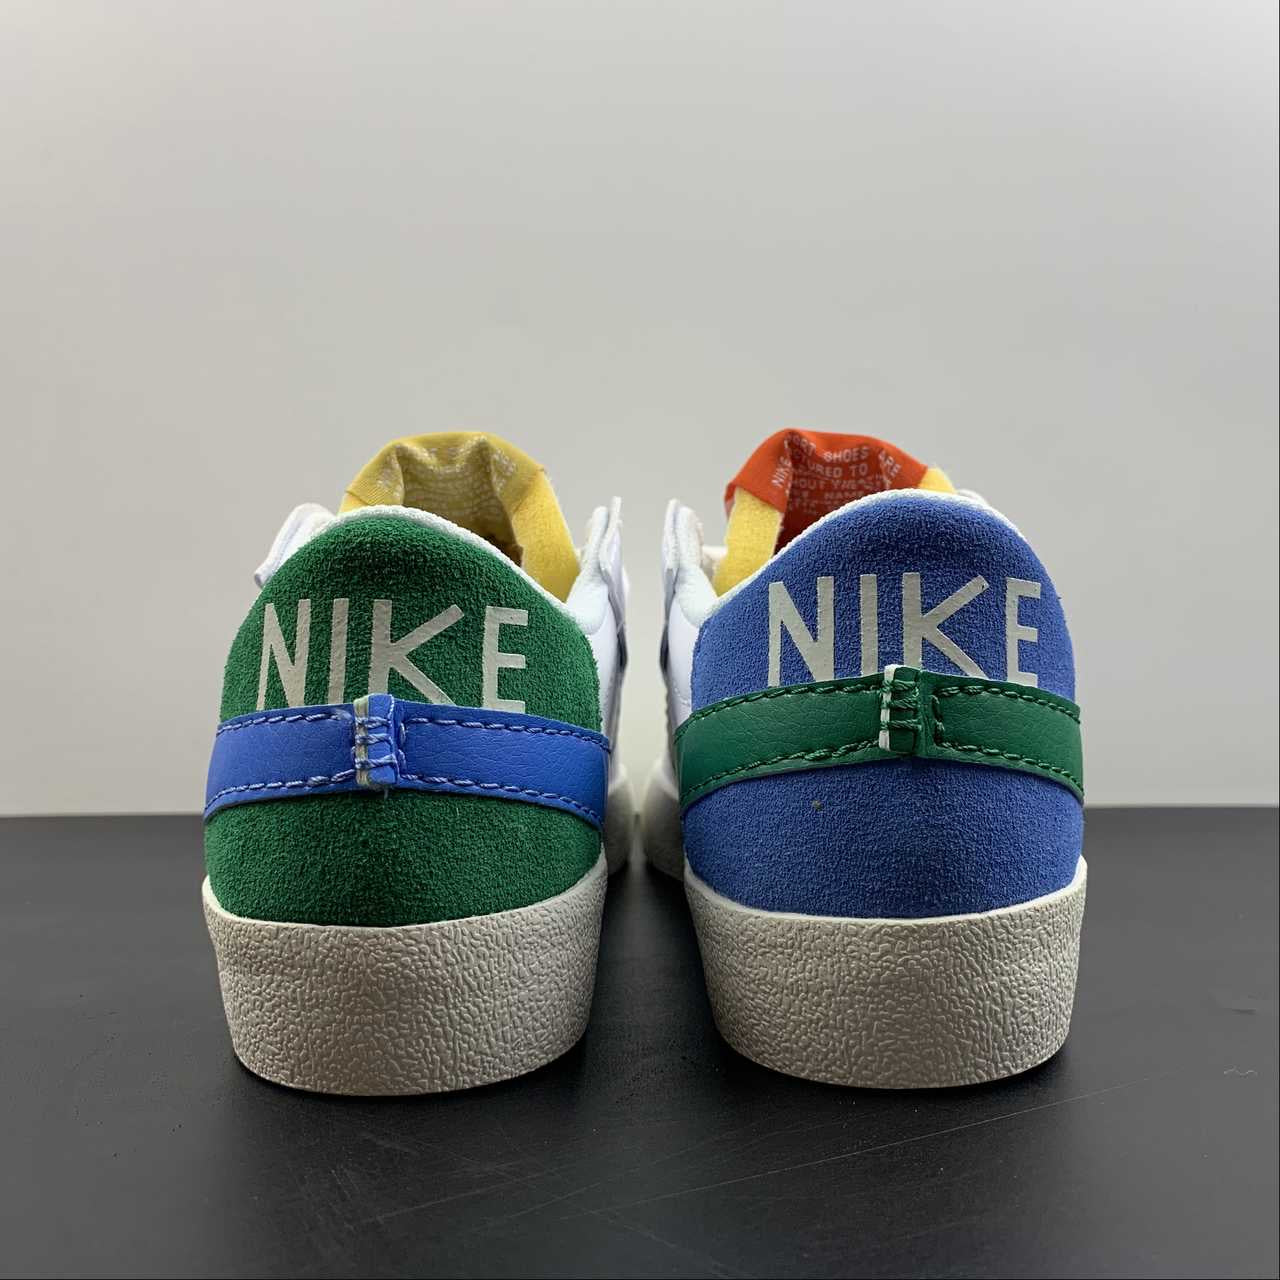 Nike blazer low blue/green